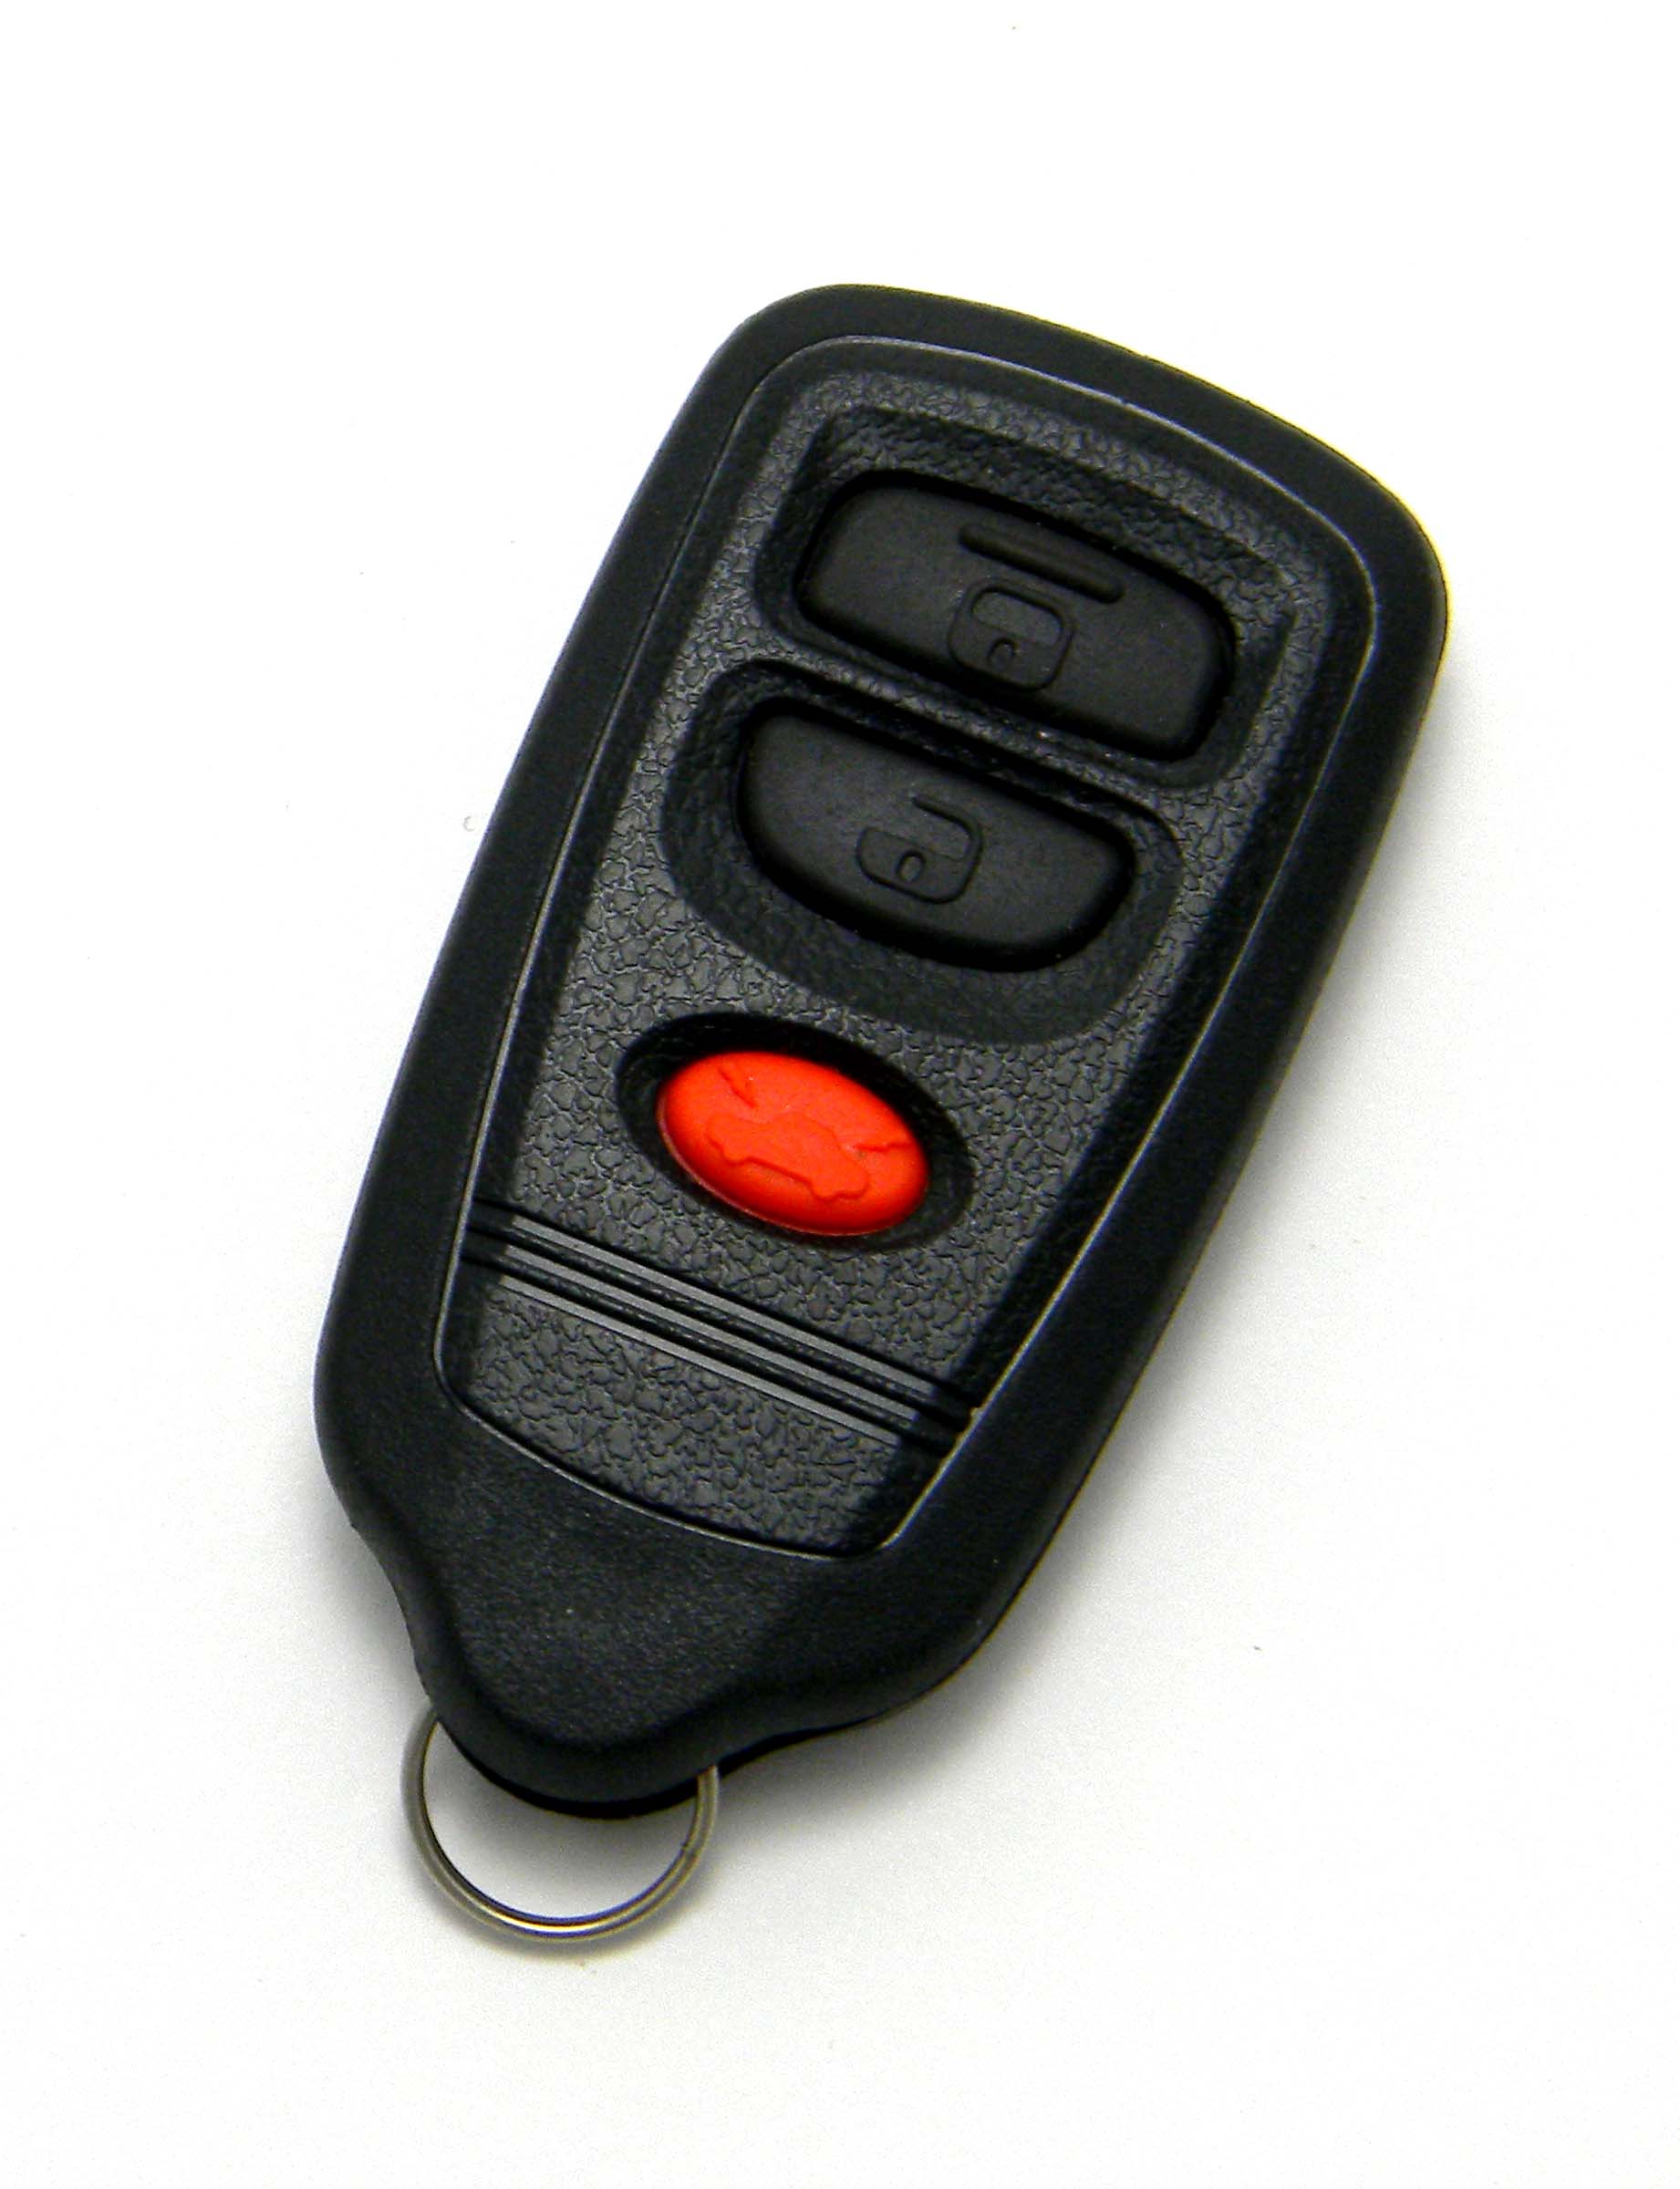 Chrysler lhs keyless entry programming instructions #3